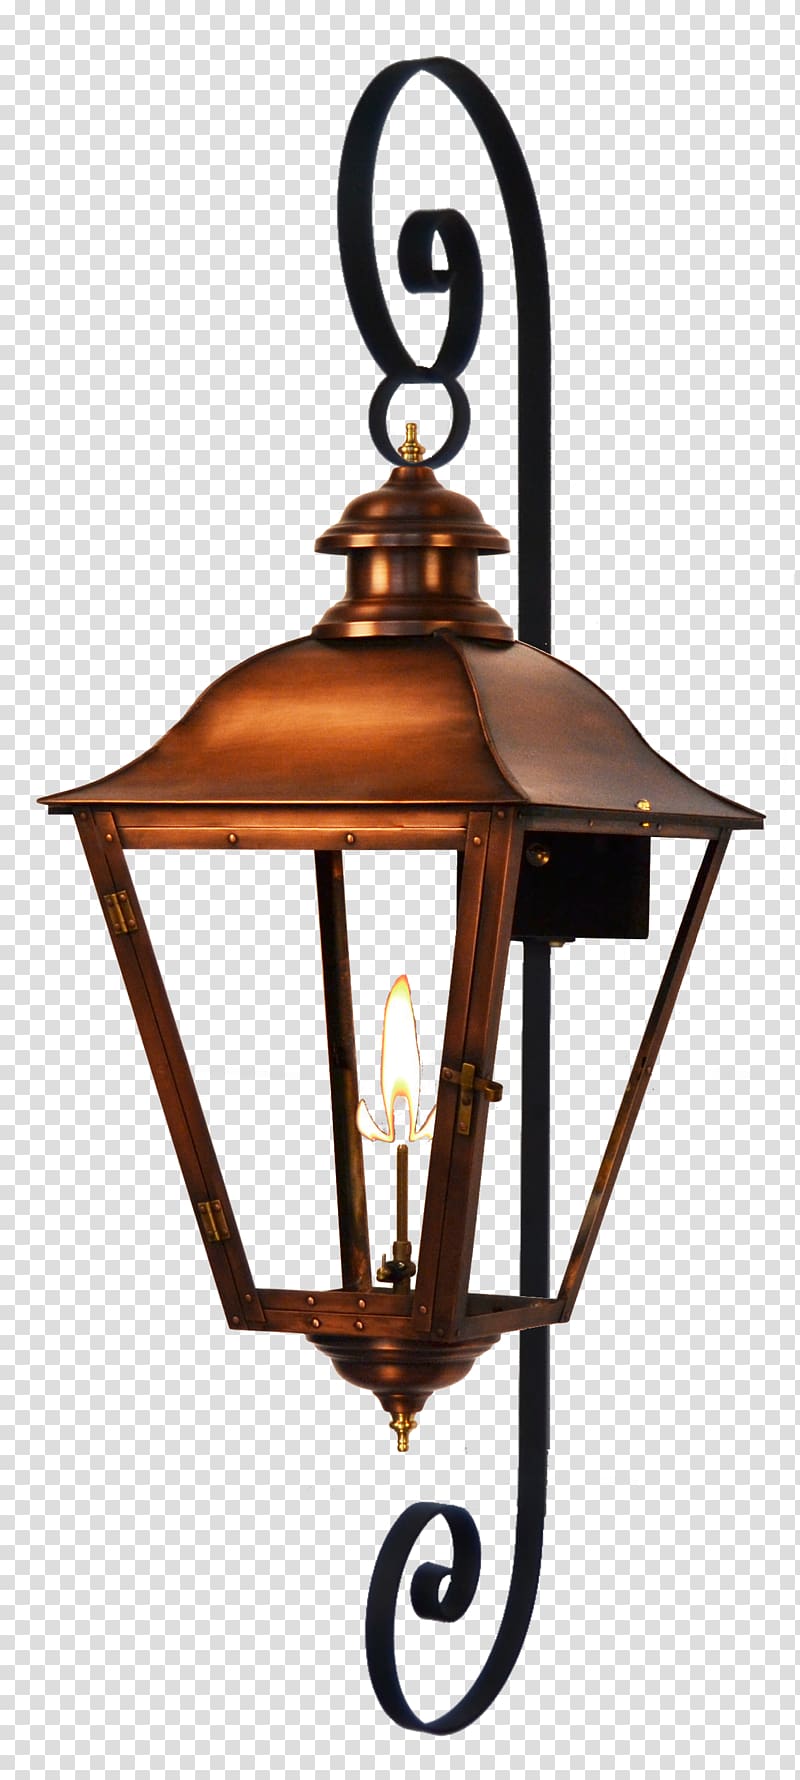 Gas lighting Light fixture Lantern Sconce, light transparent background PNG clipart